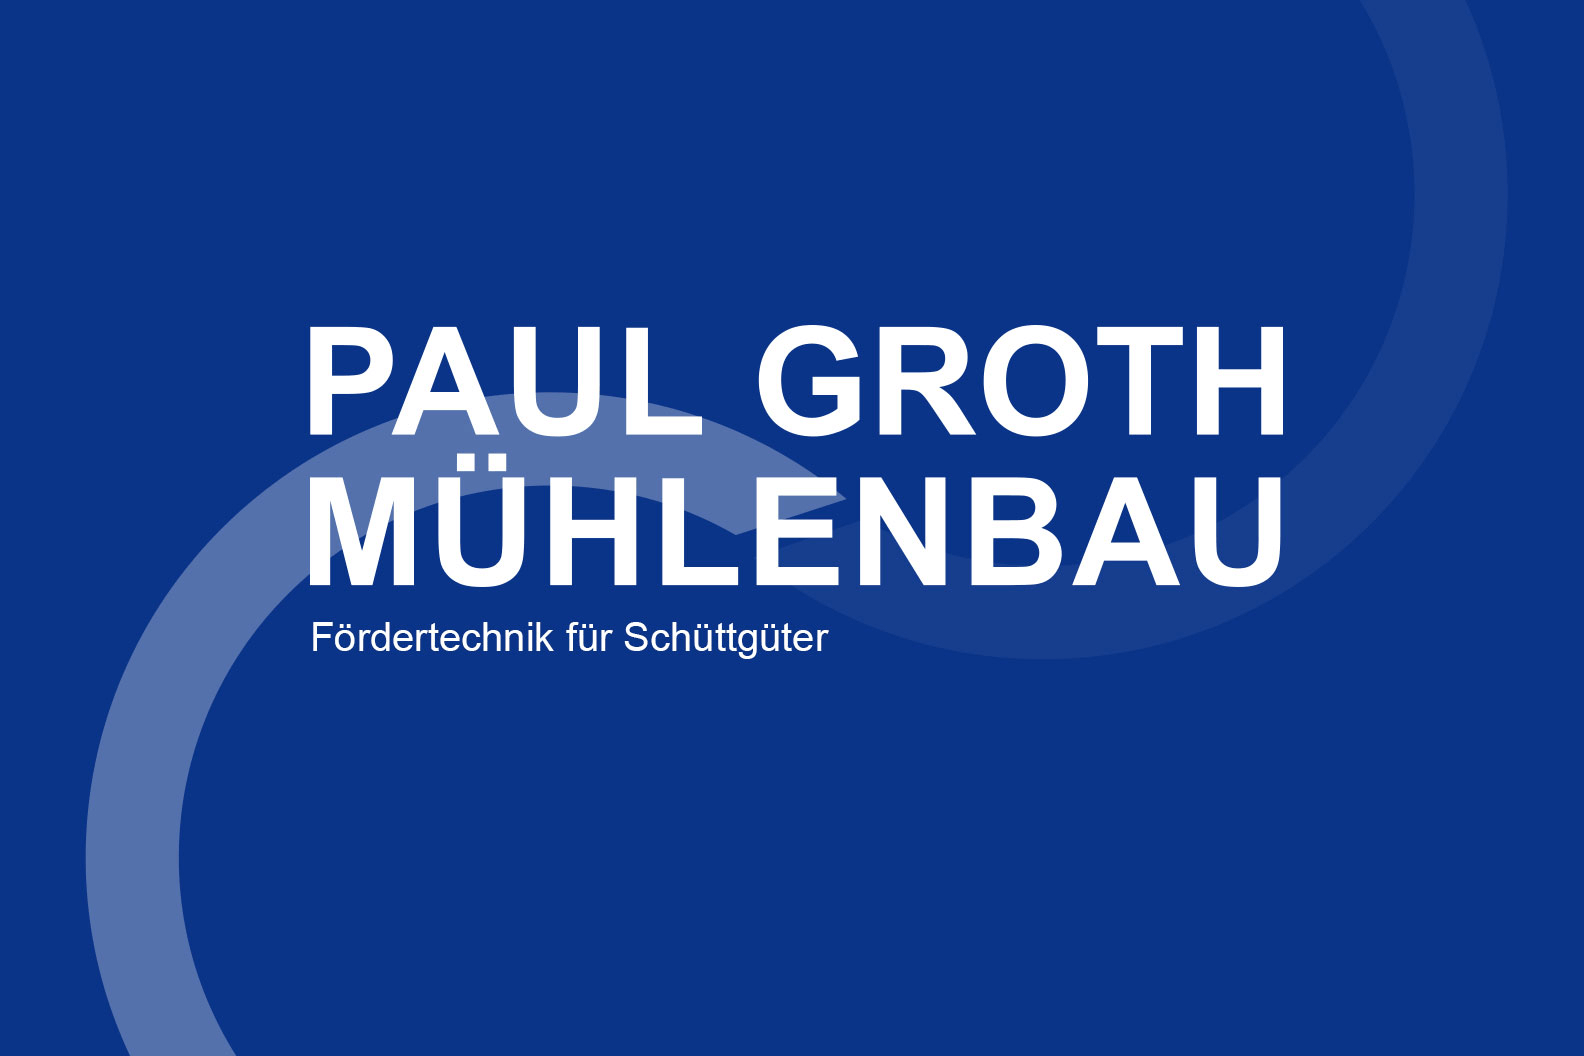 PAUL GROTH Mühlenbau – Redesign